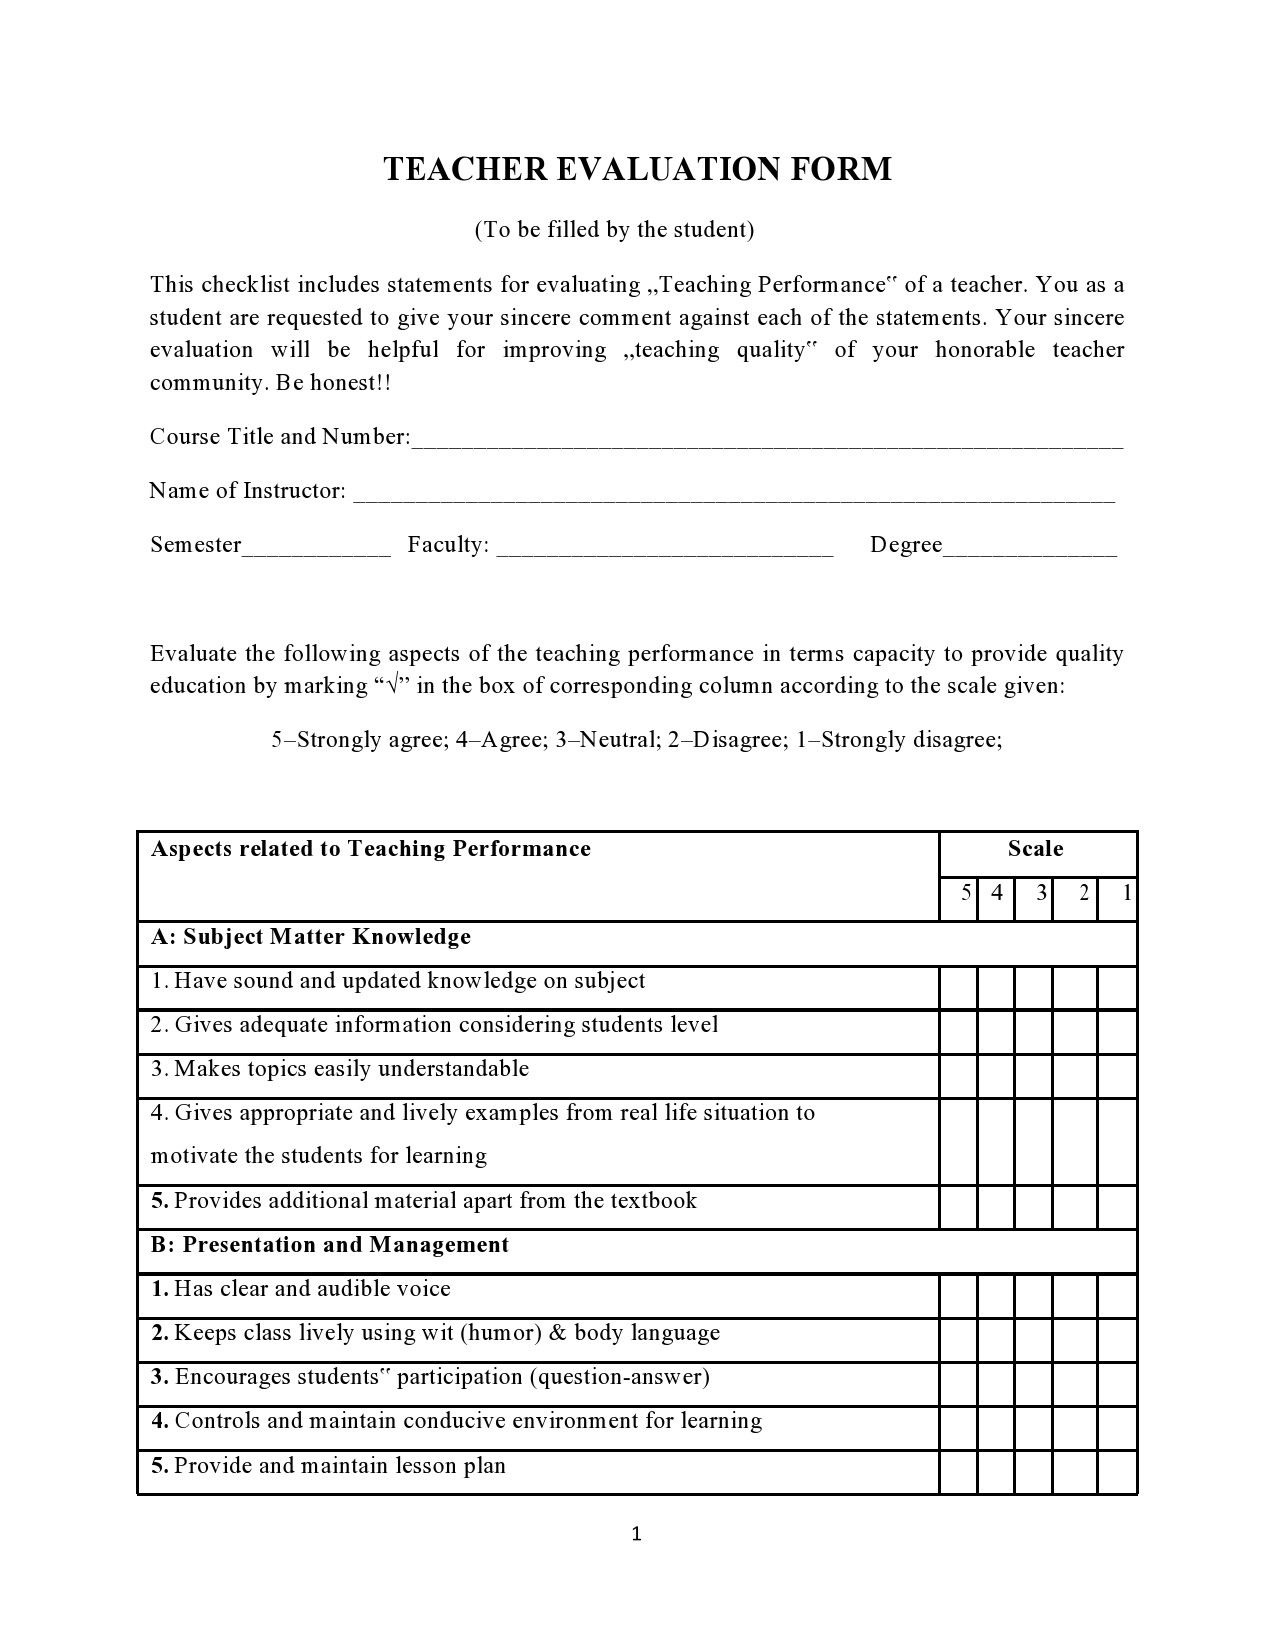 teacher-evaluation-form-download-printable-pdf-templateroller-porn